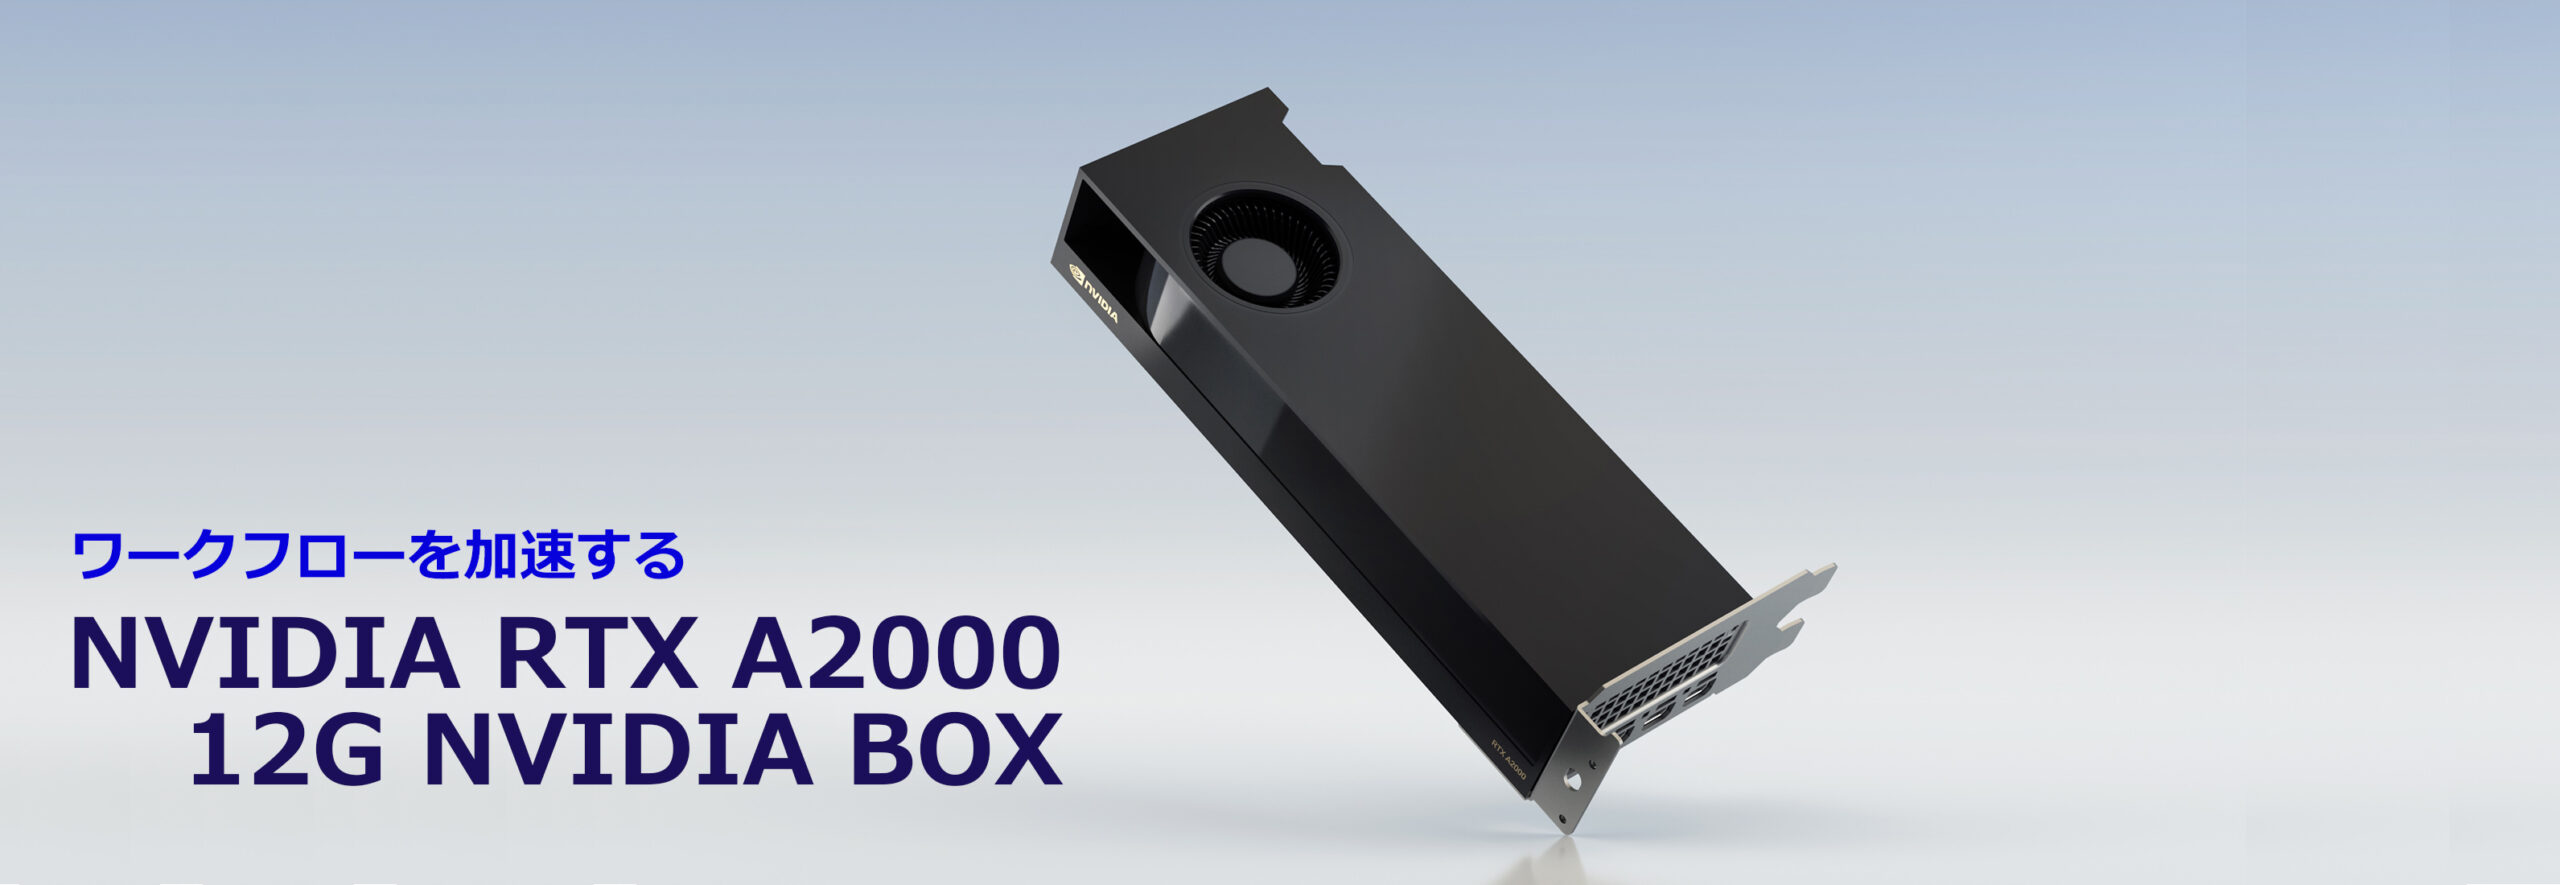 NVIDIA RTX A2000 12G NVIDIA BOX【美品】